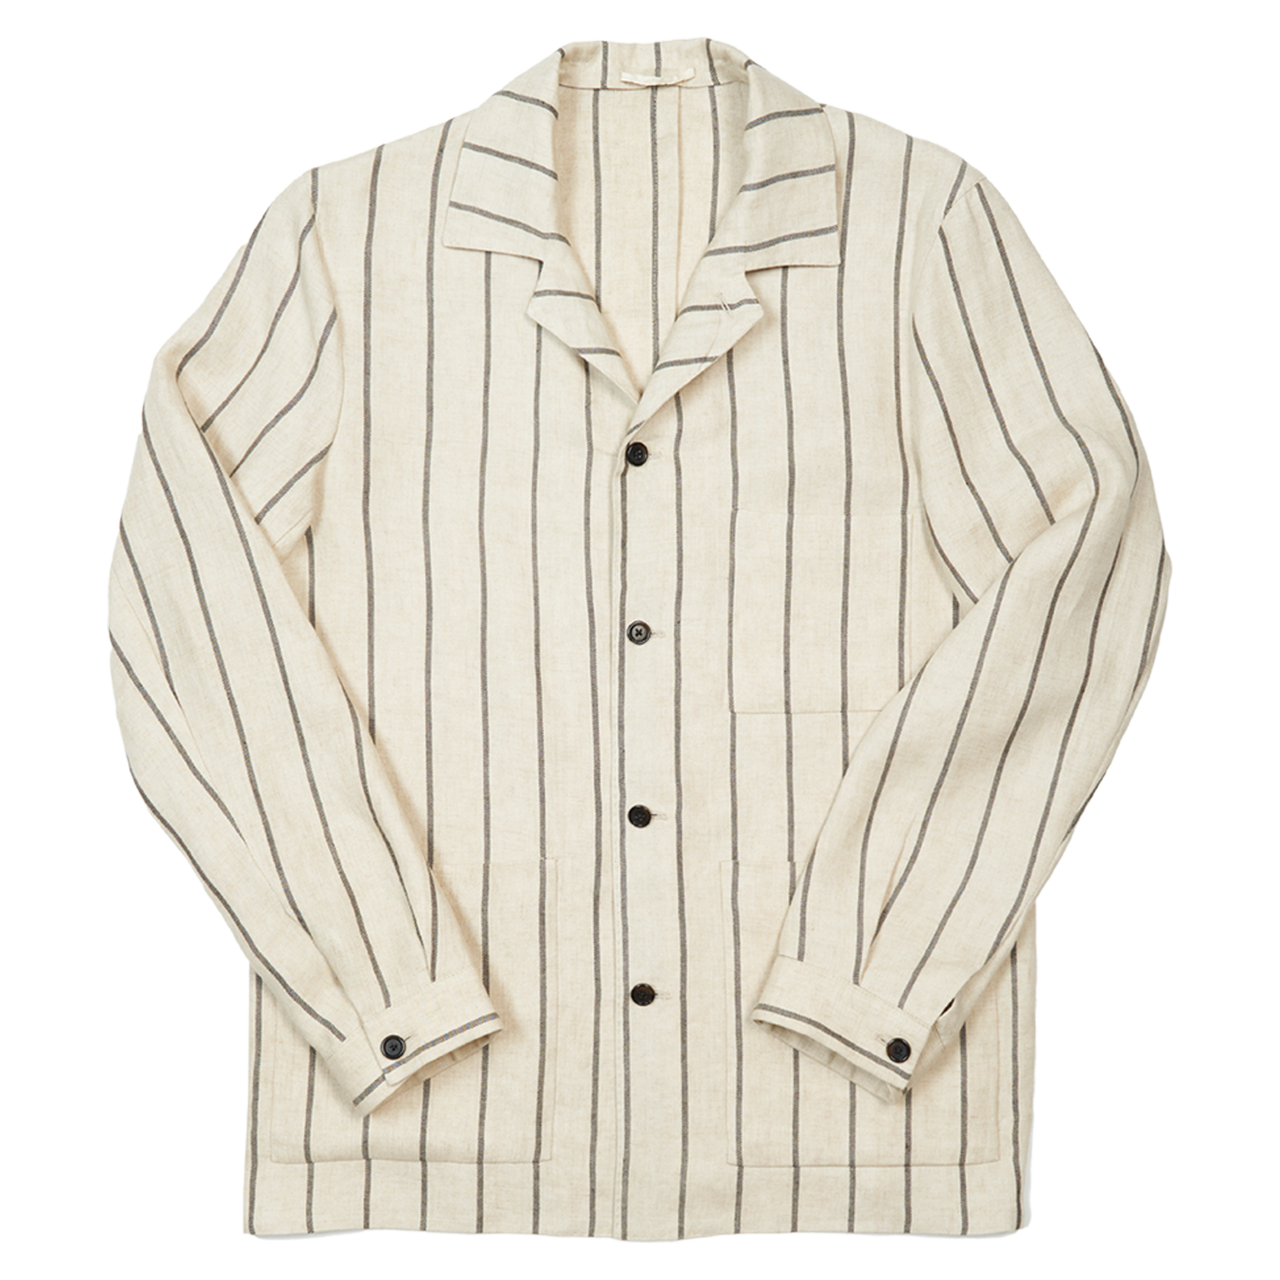 P. Johnson Shirt Jacket in Beige Stripe Linen